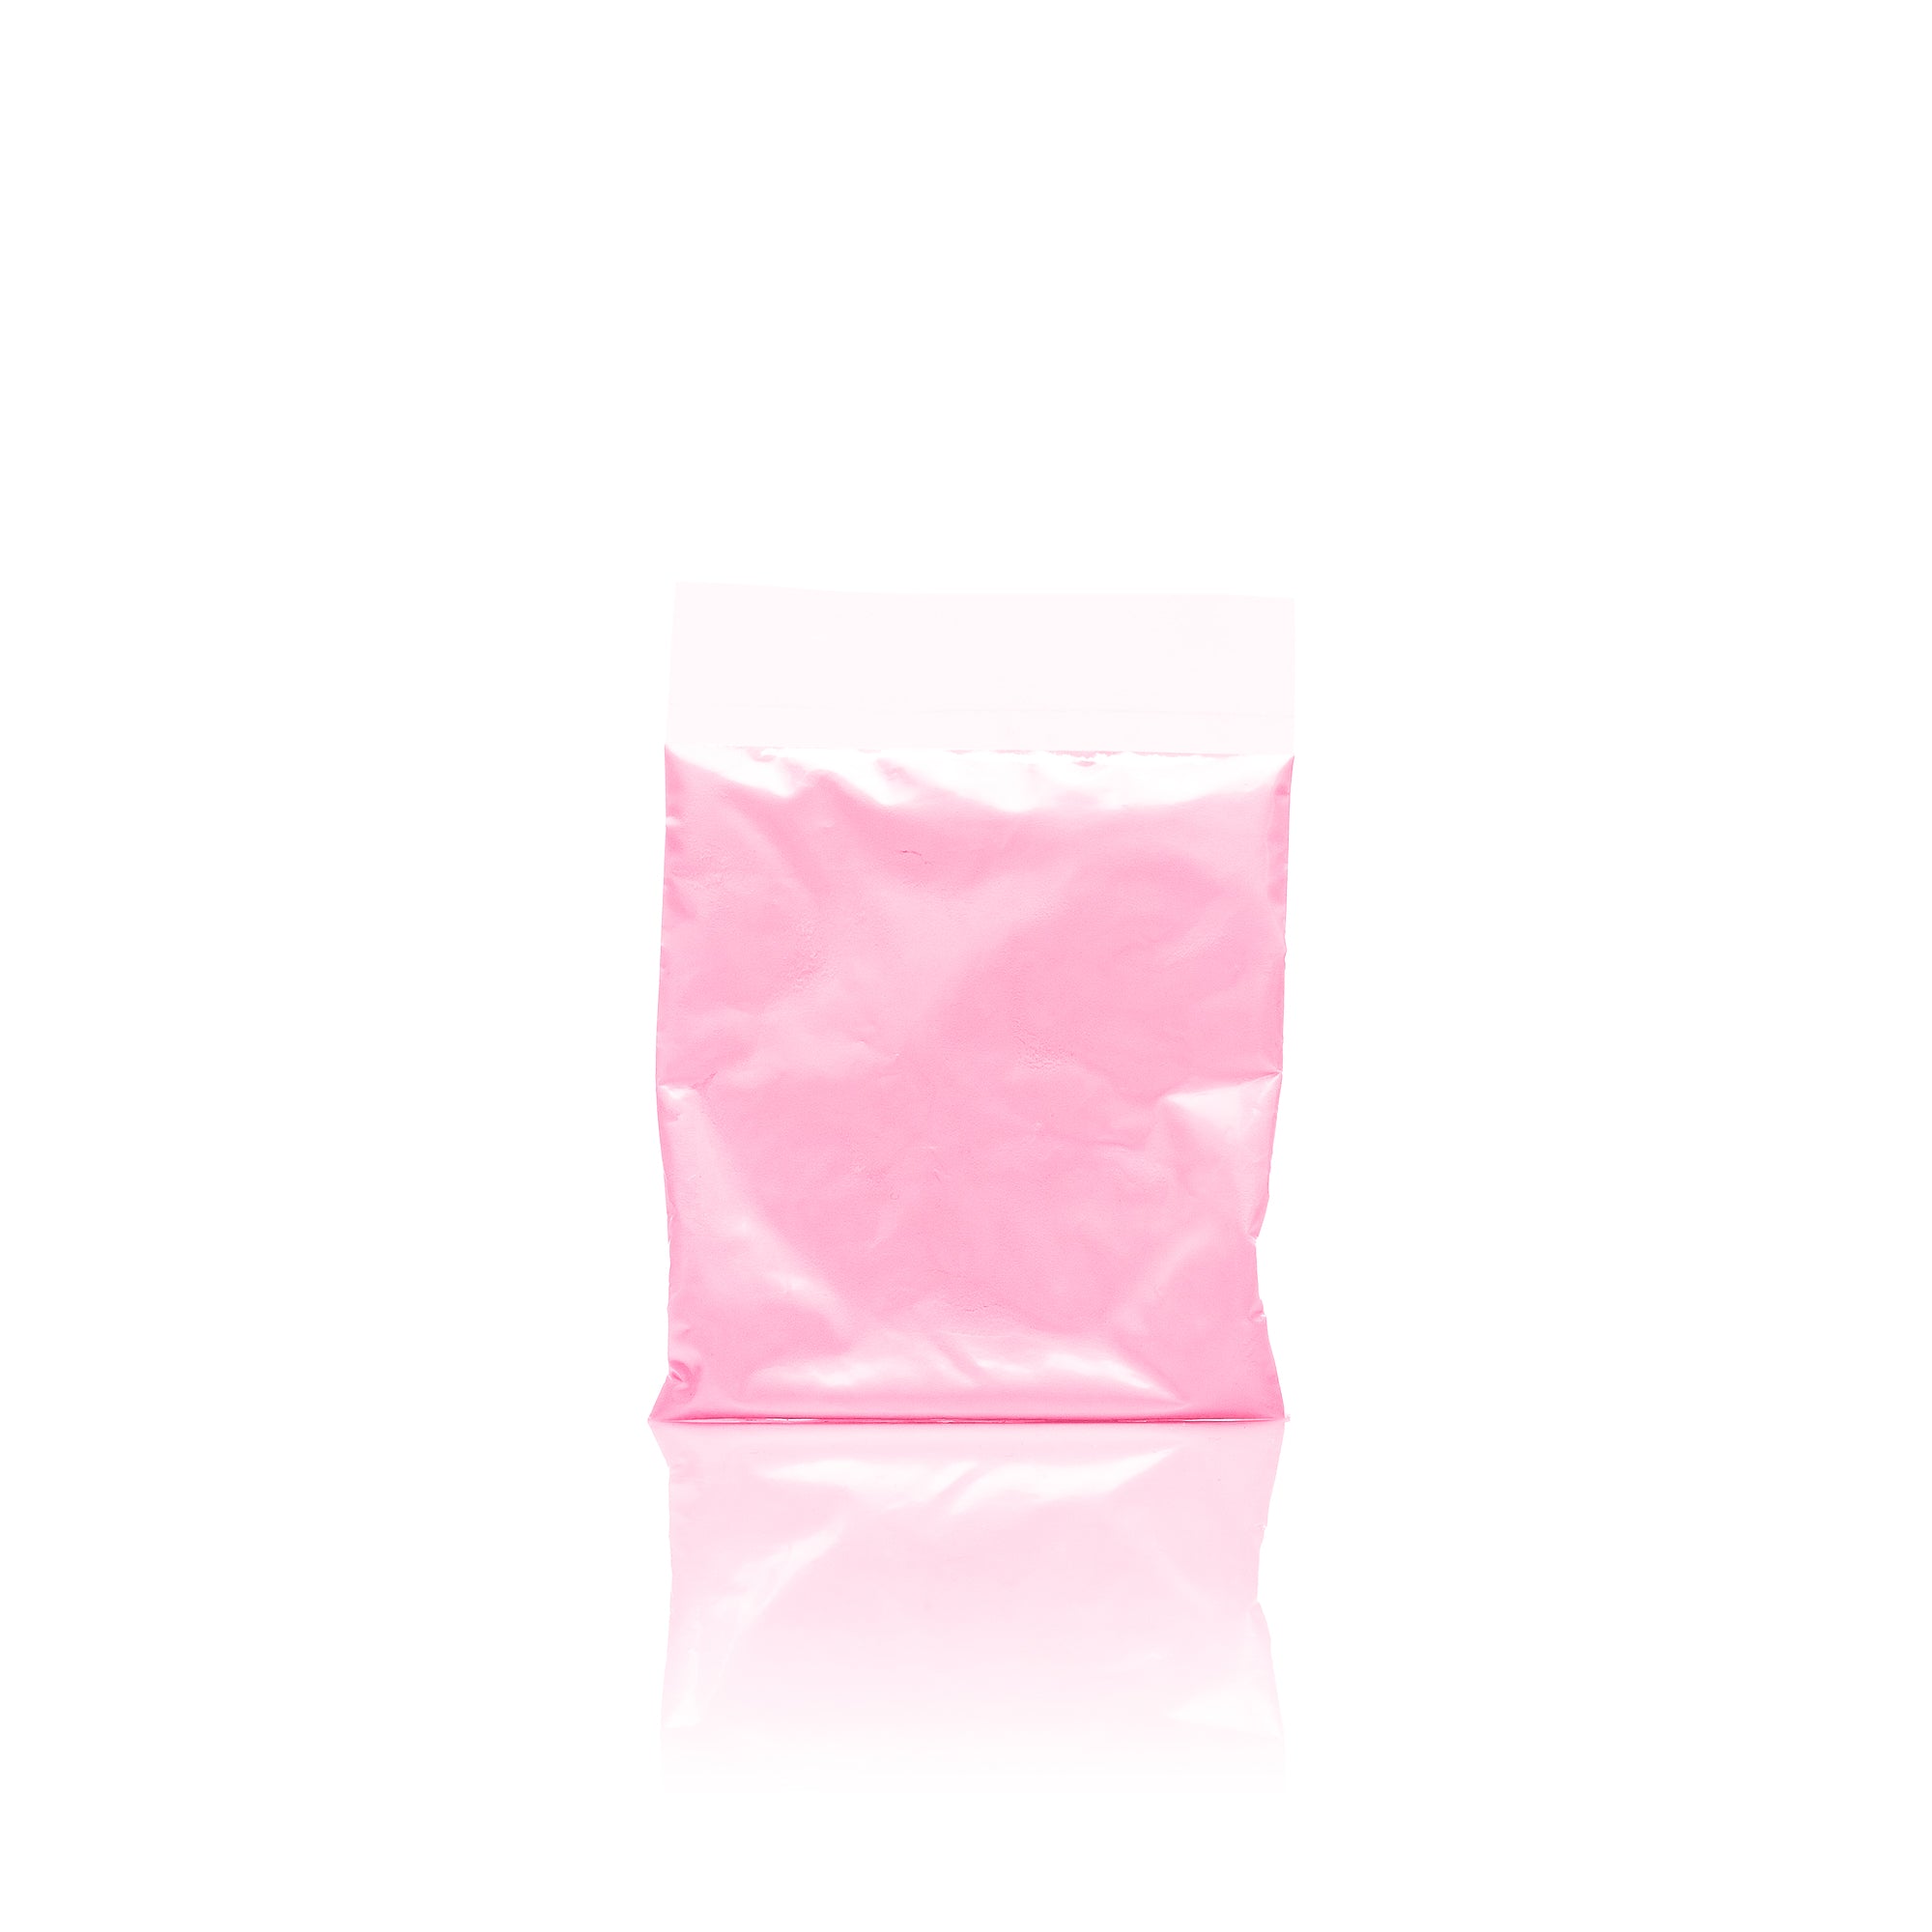 AdultsHK ❤ Clone-A-Willy Molding Powder Refill 模具粉補充裝3oz